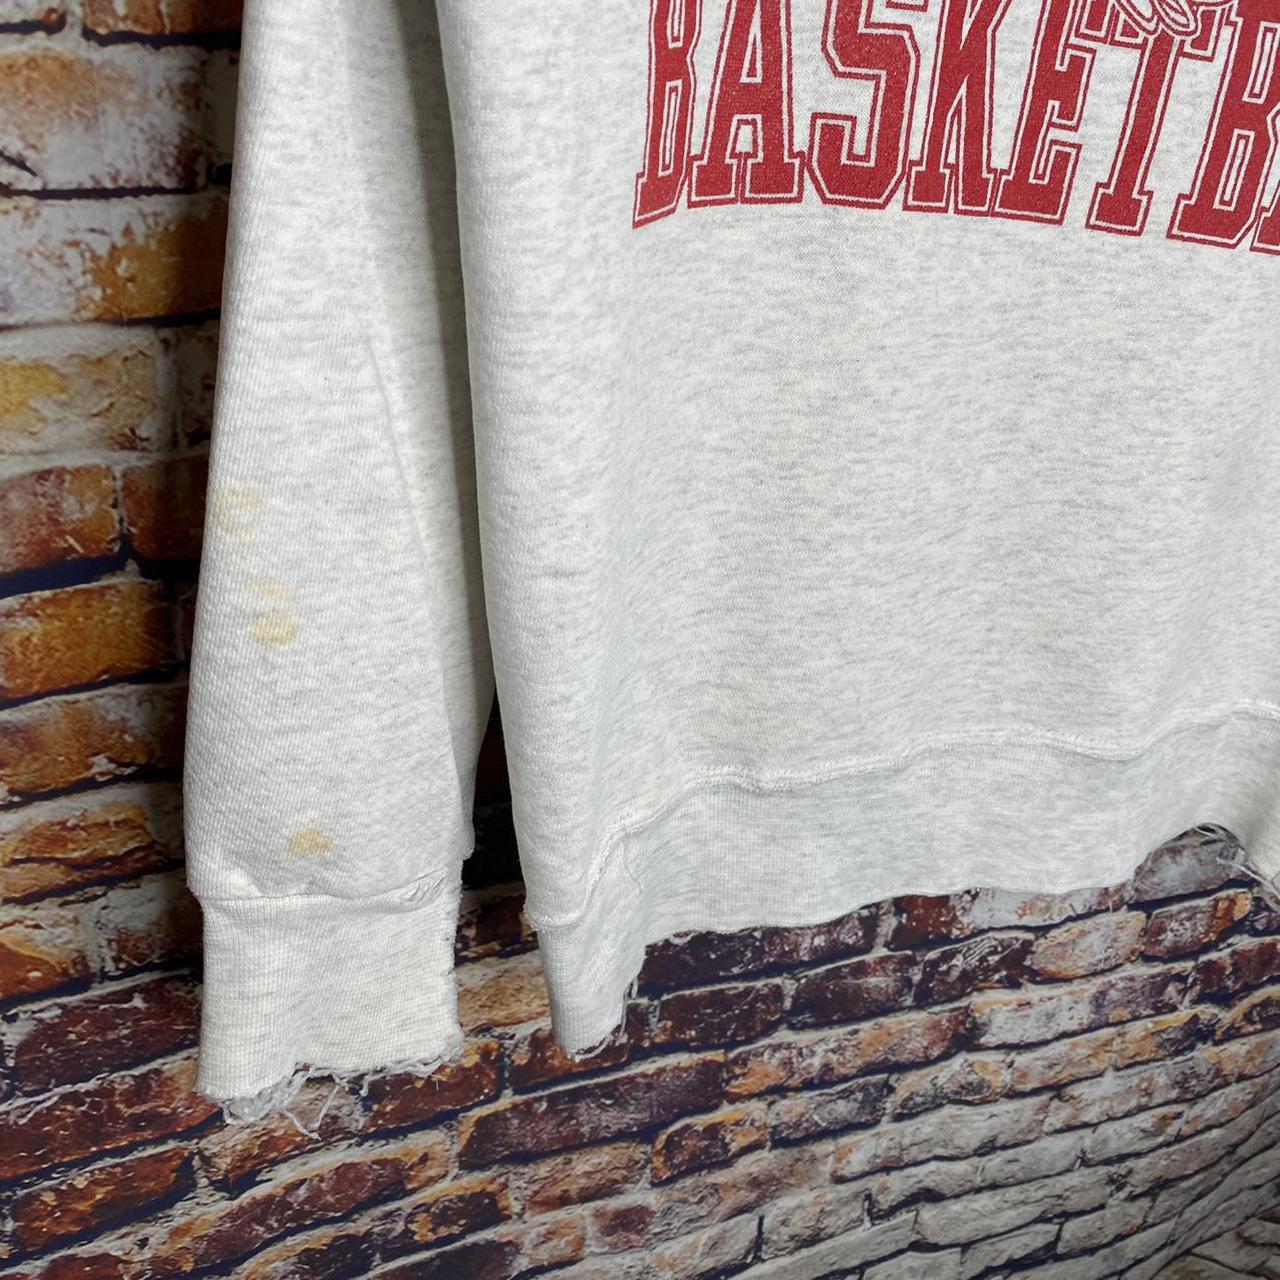 Vintage Louisville Basketball Collegiate Crewneck - Depop